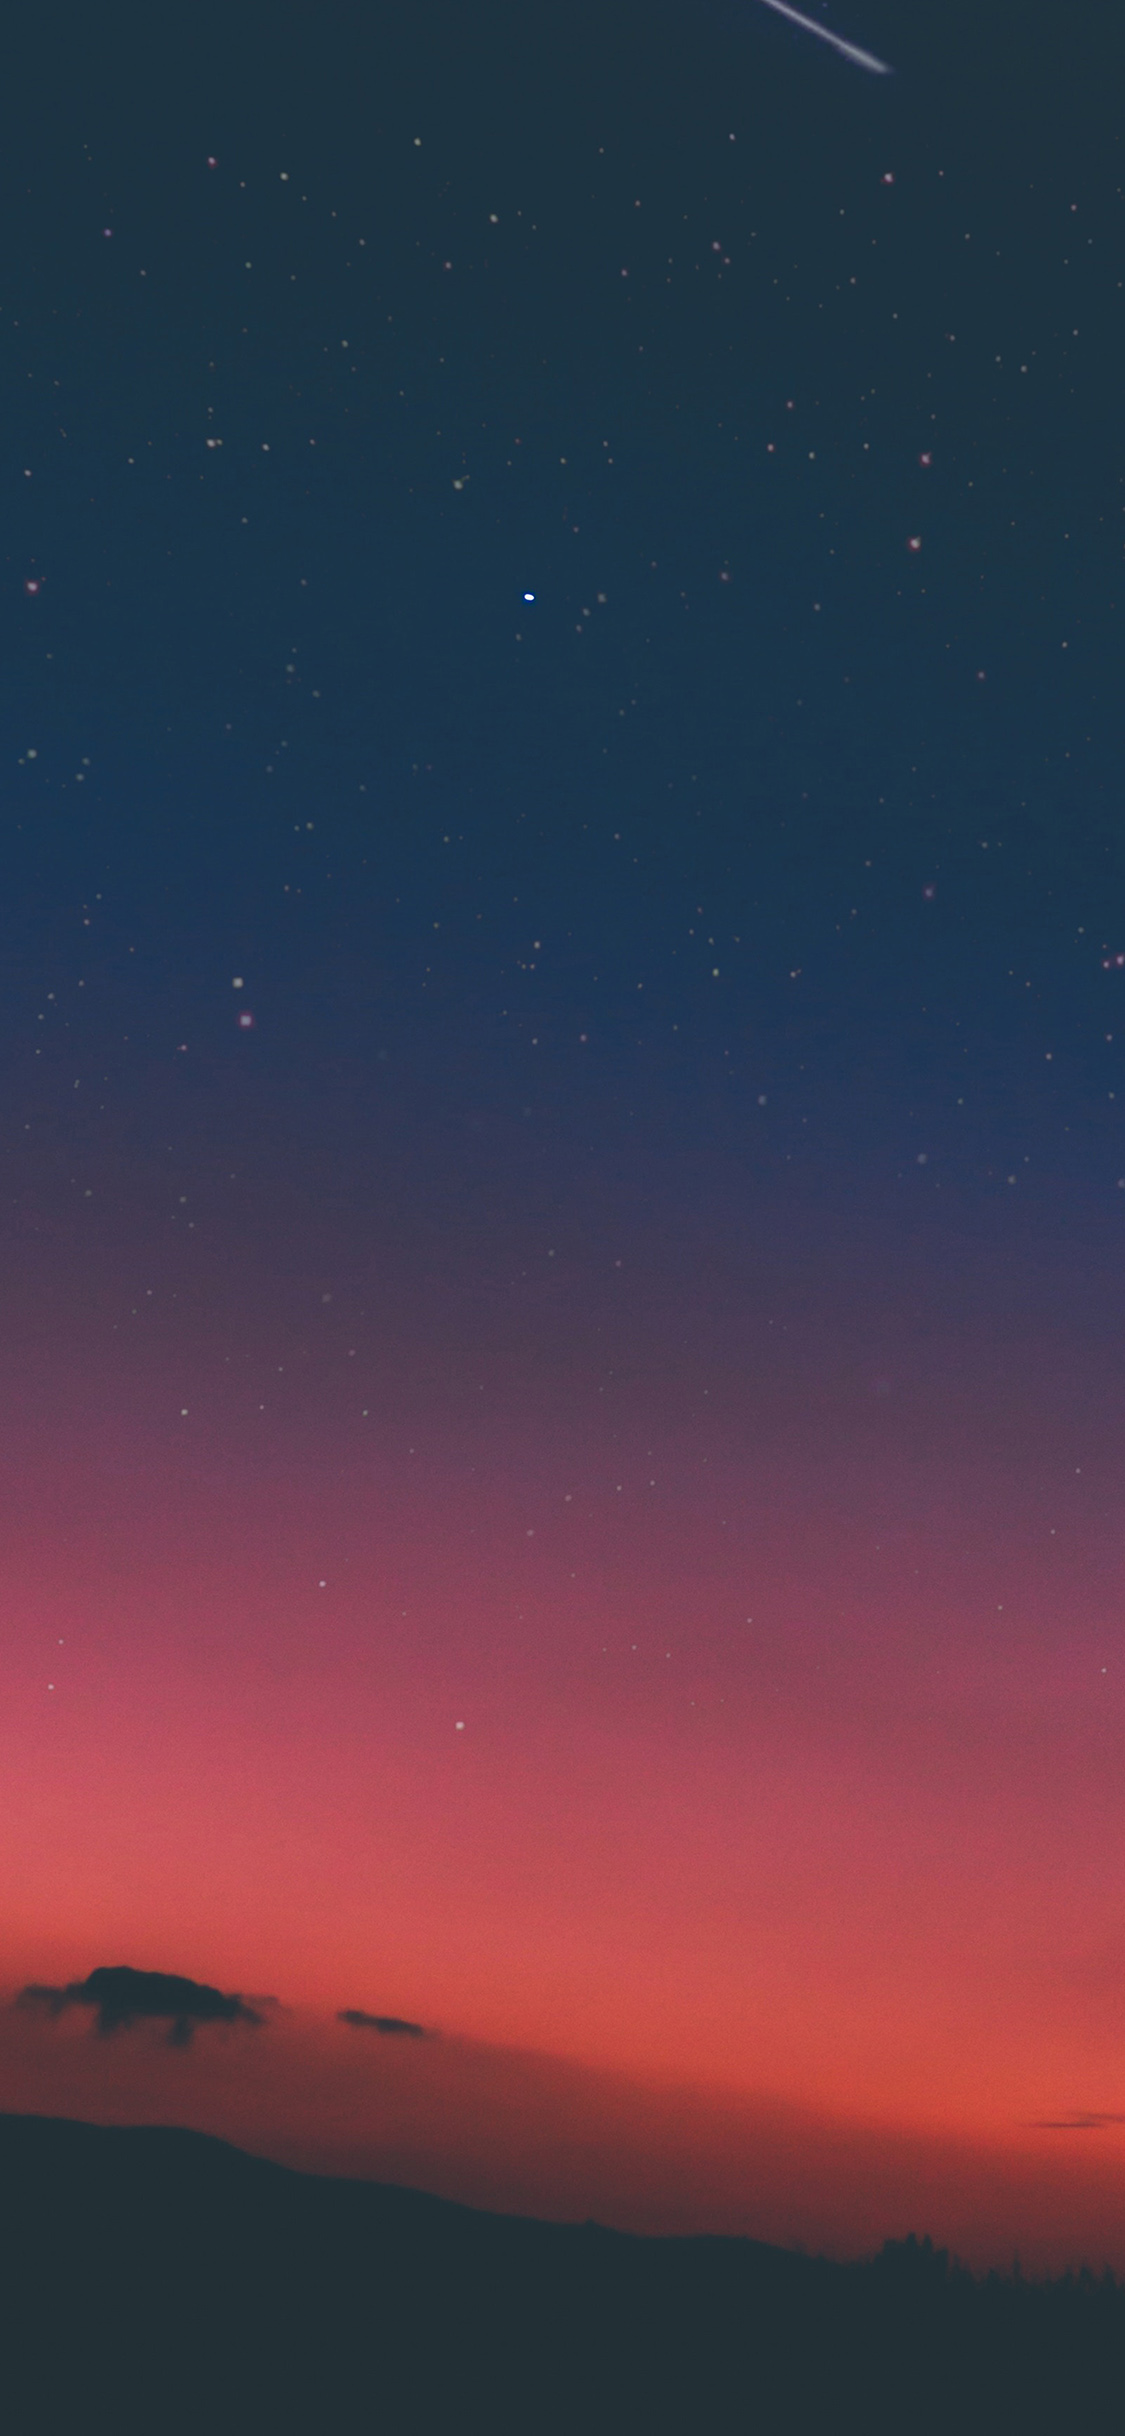 iPhone X wallpaper. night sky sunset pink nature